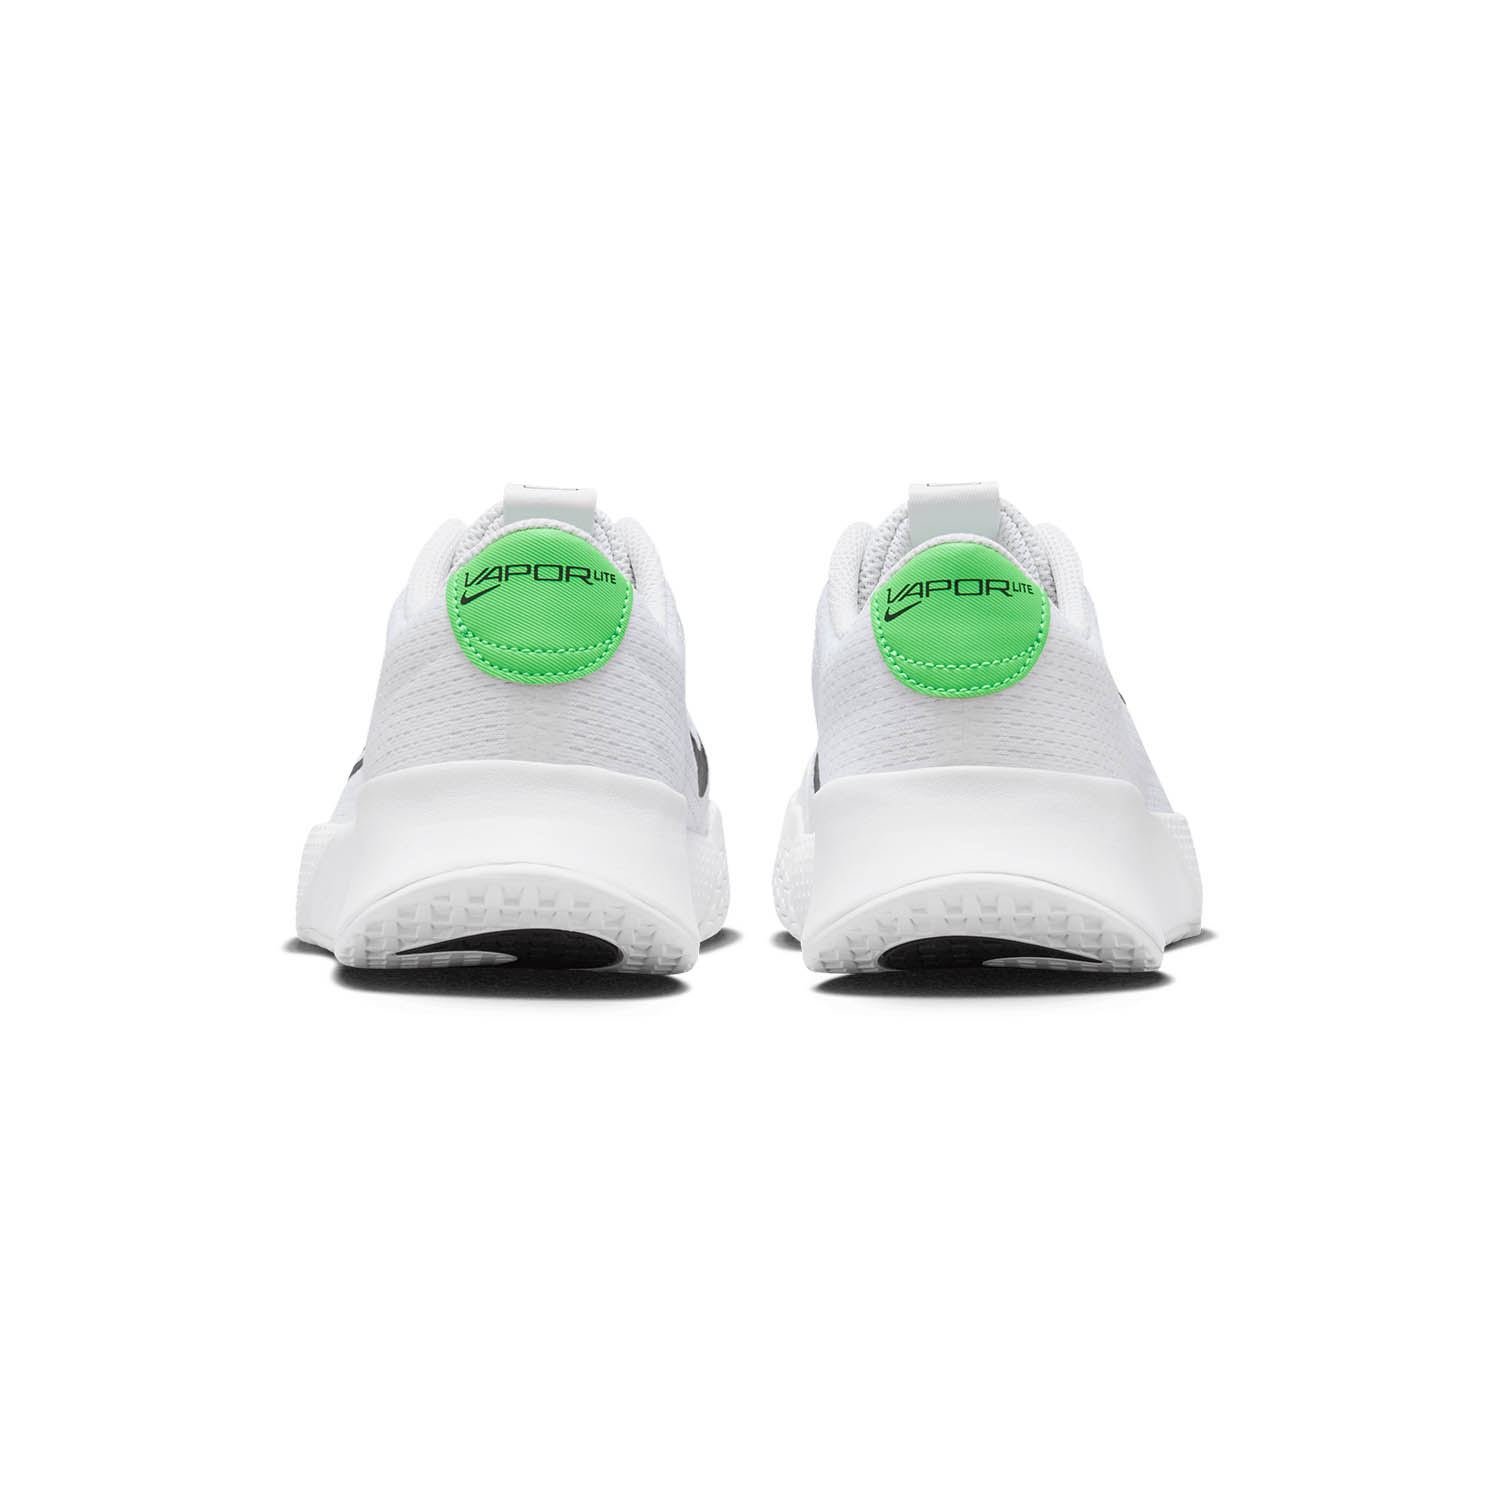 Nike Court Vapor Lite 2 HC - White/Black/Poison Green